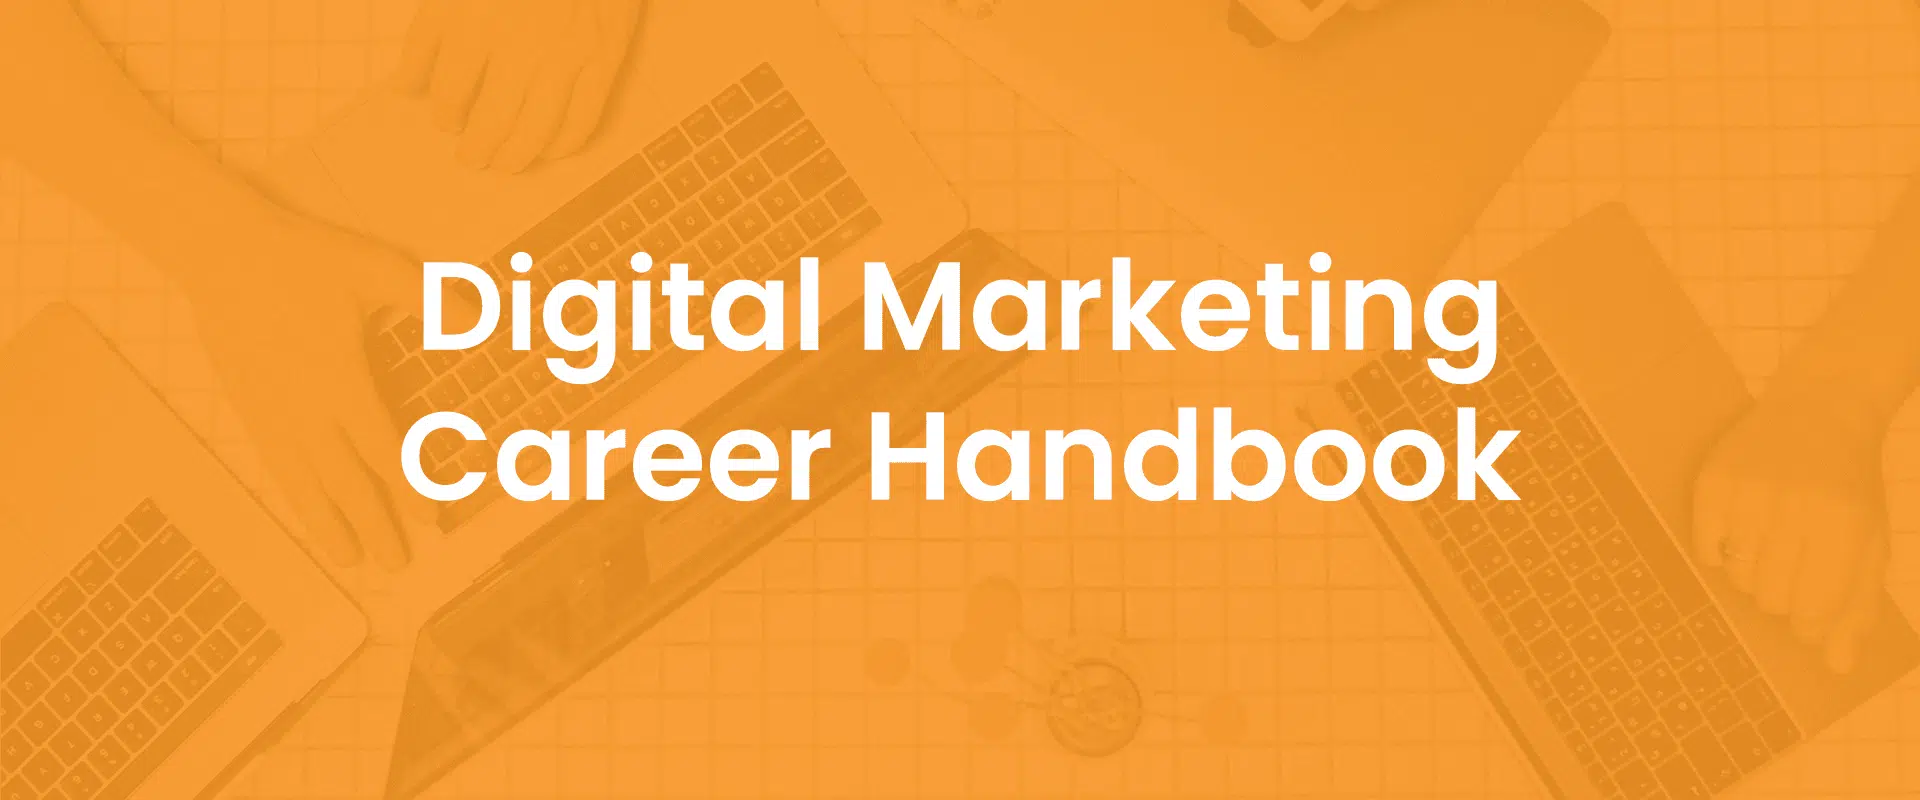 Digital Marketing Career Handbook Cover Image Resources